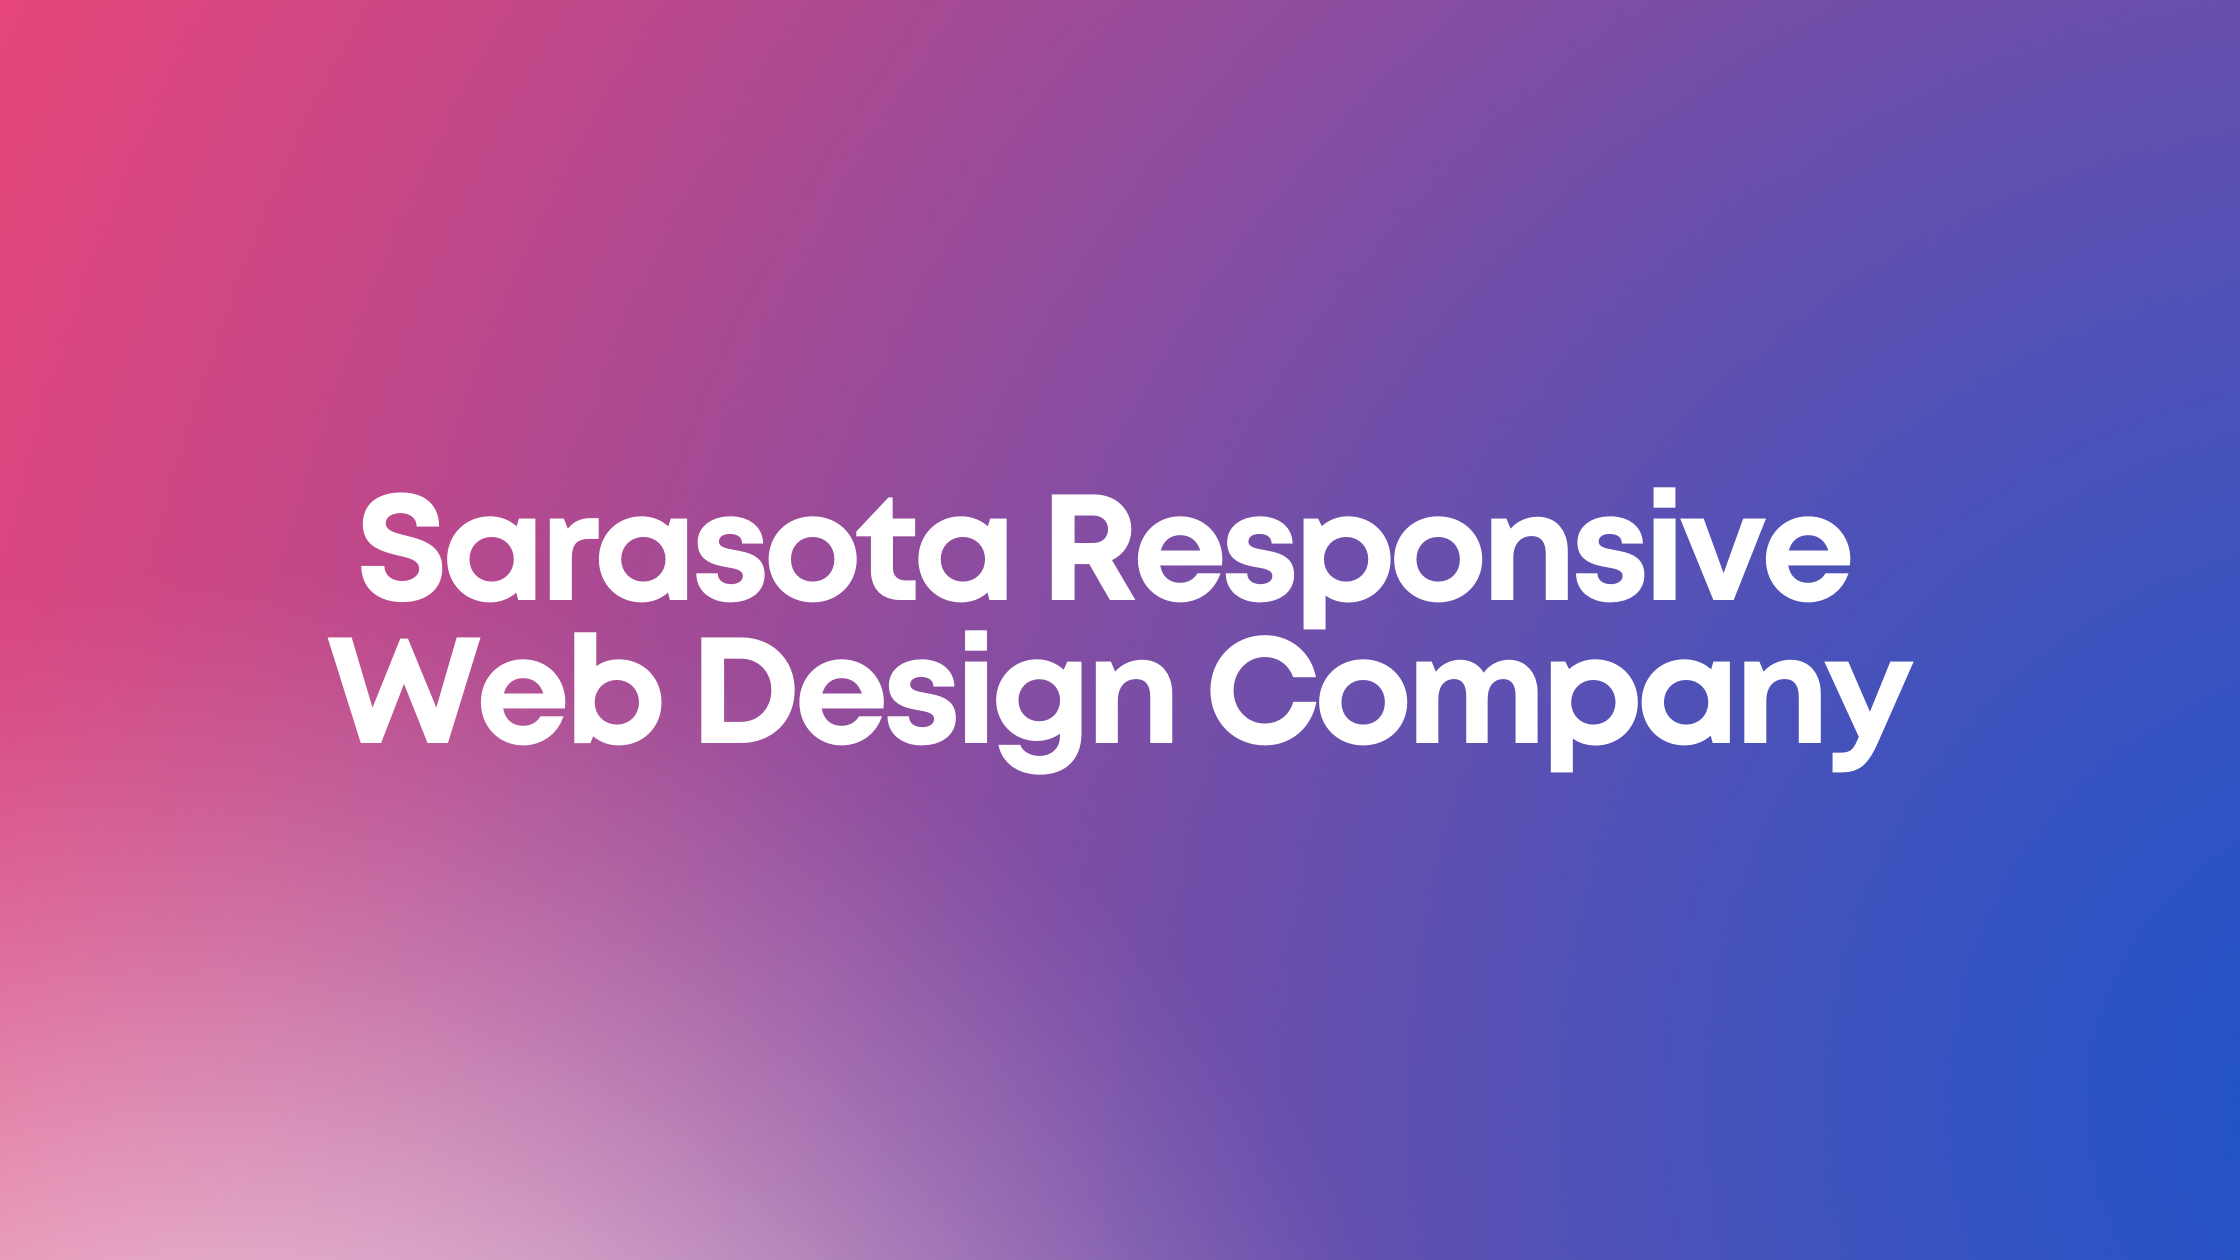 Sarasota Responsive Web Design Company